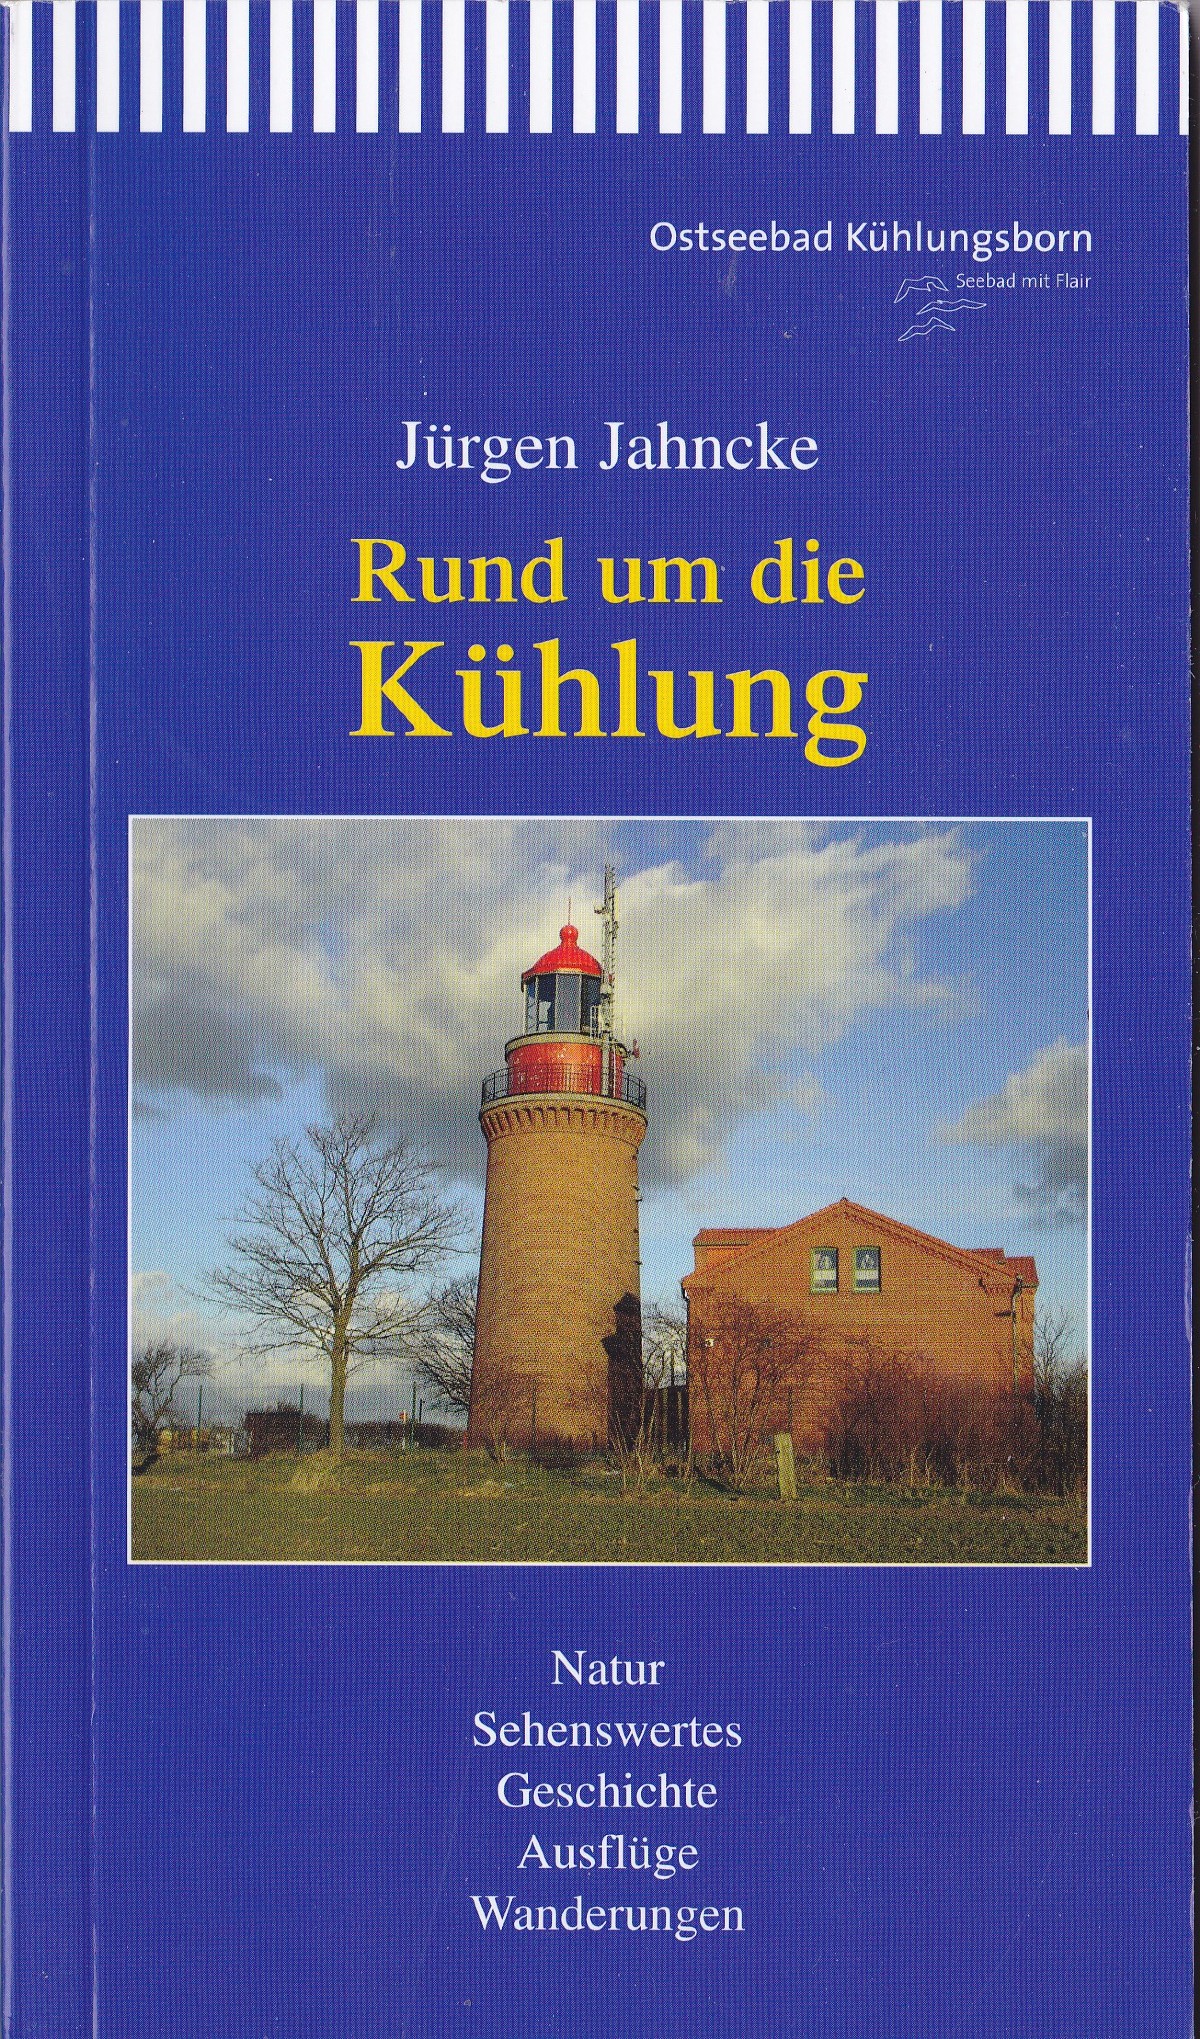 Verlag: Touristik-Service-Kühlungsborn GmbH Ostsee